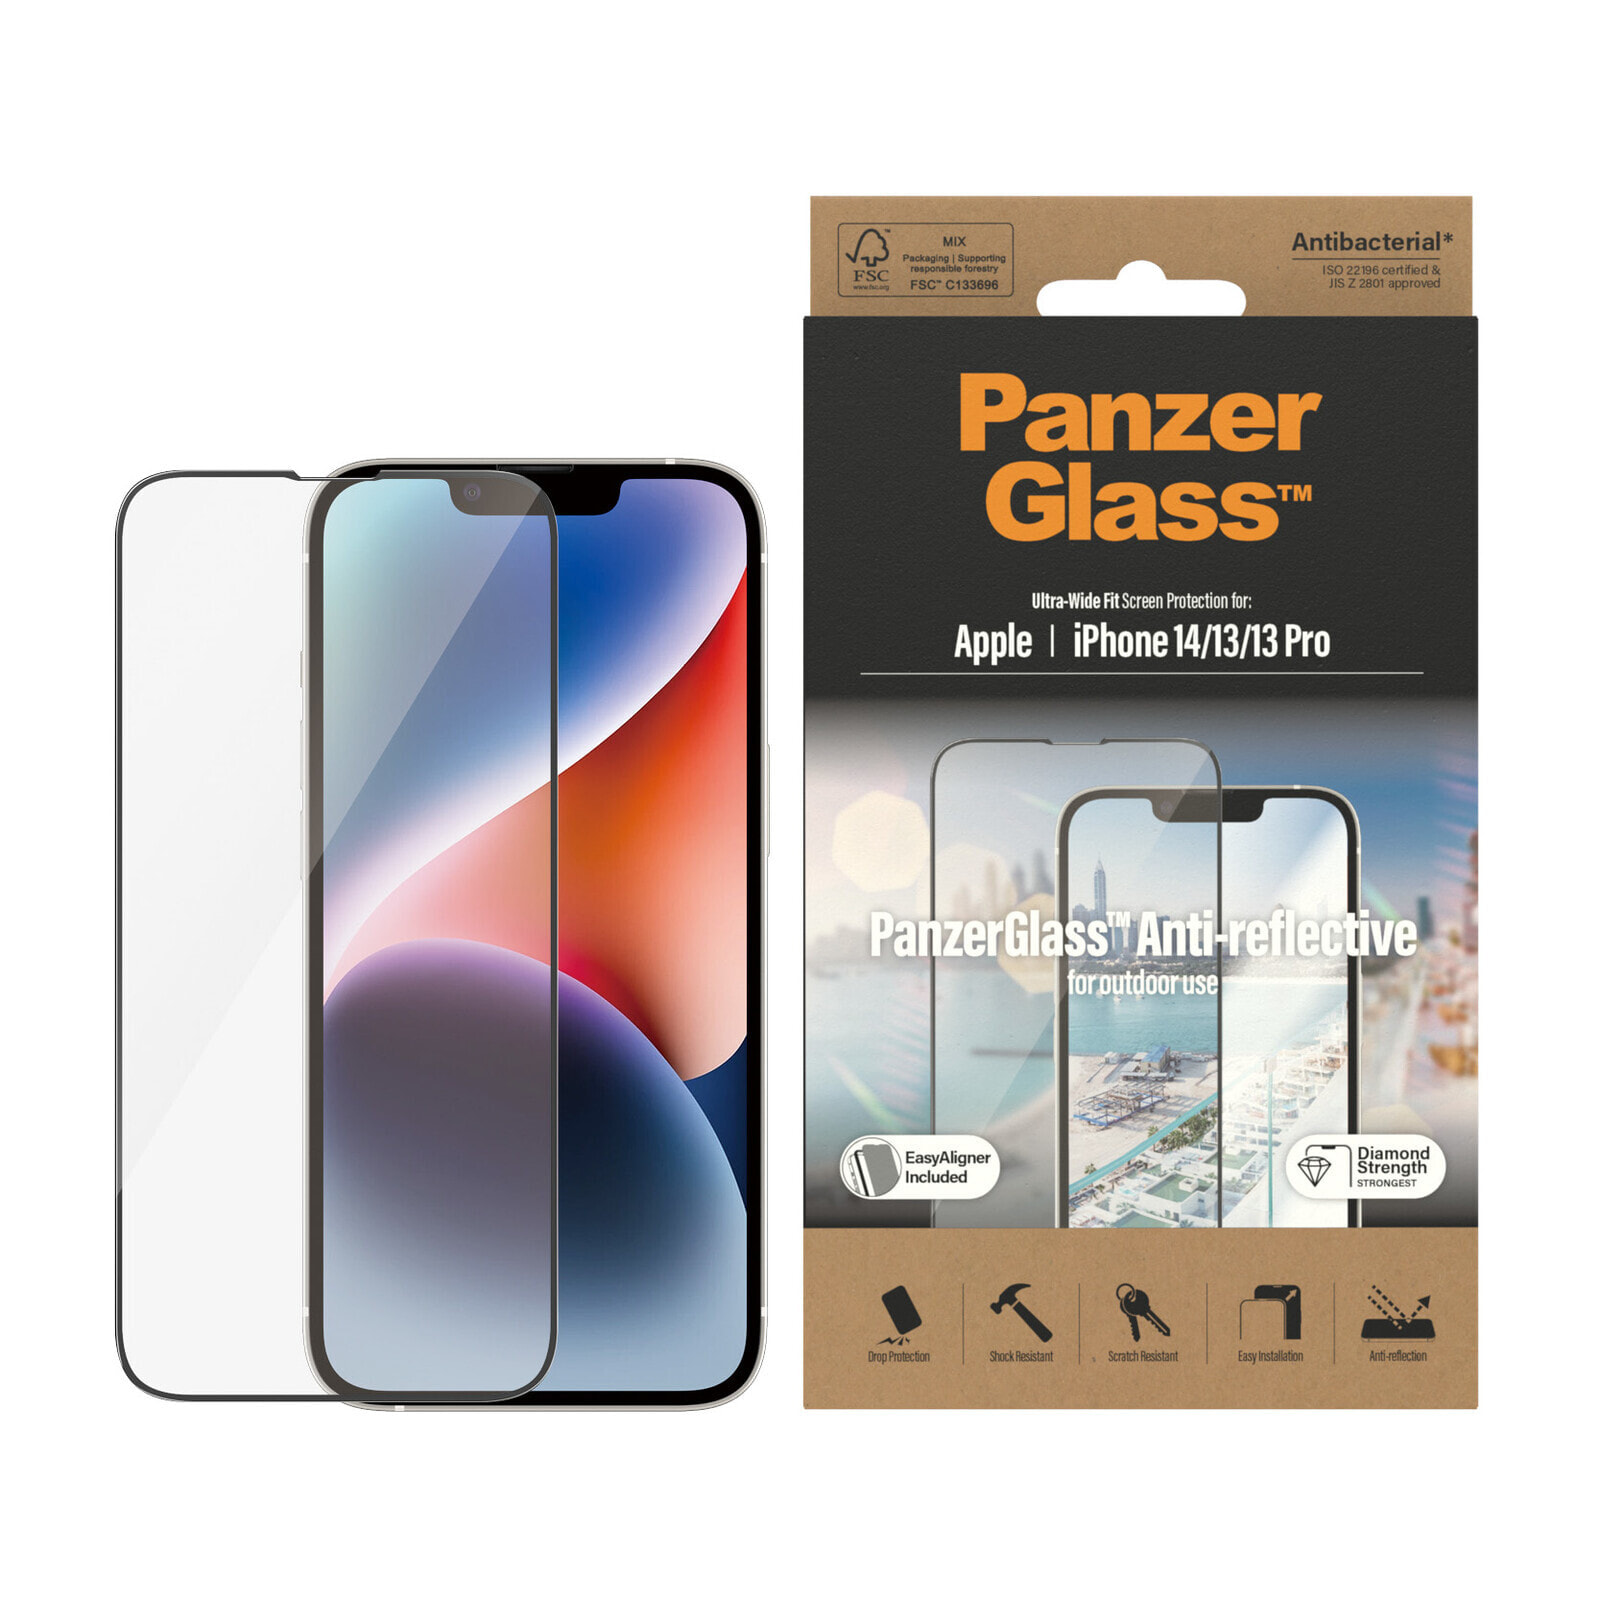 PanzerGlass Ultra-Wide Fit Apple iPhone Антибликовый протектор для экрана 1 шт 2787